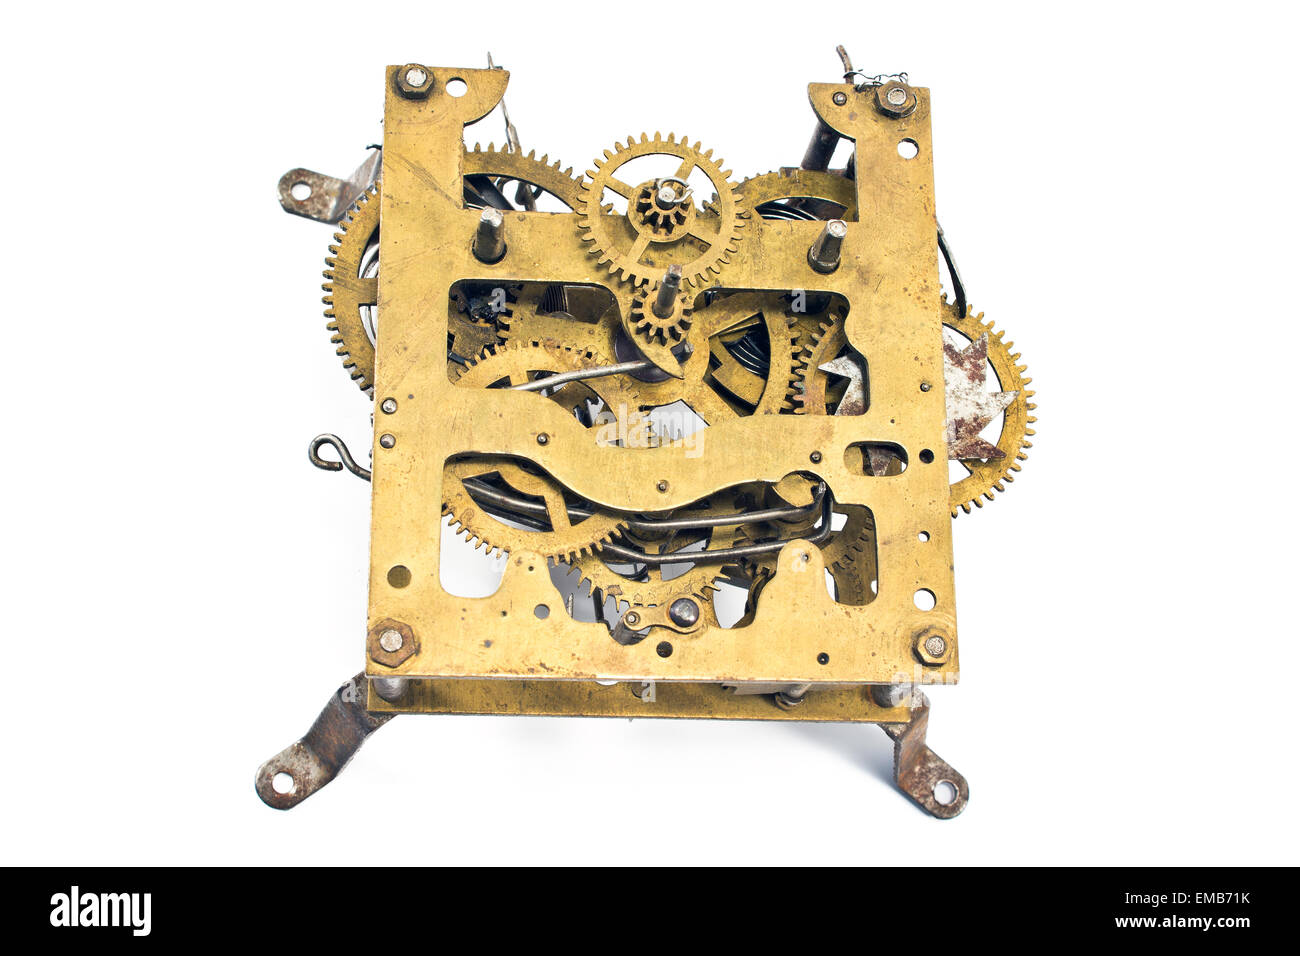 Inside mechanism of old alarm clock Stock Photo